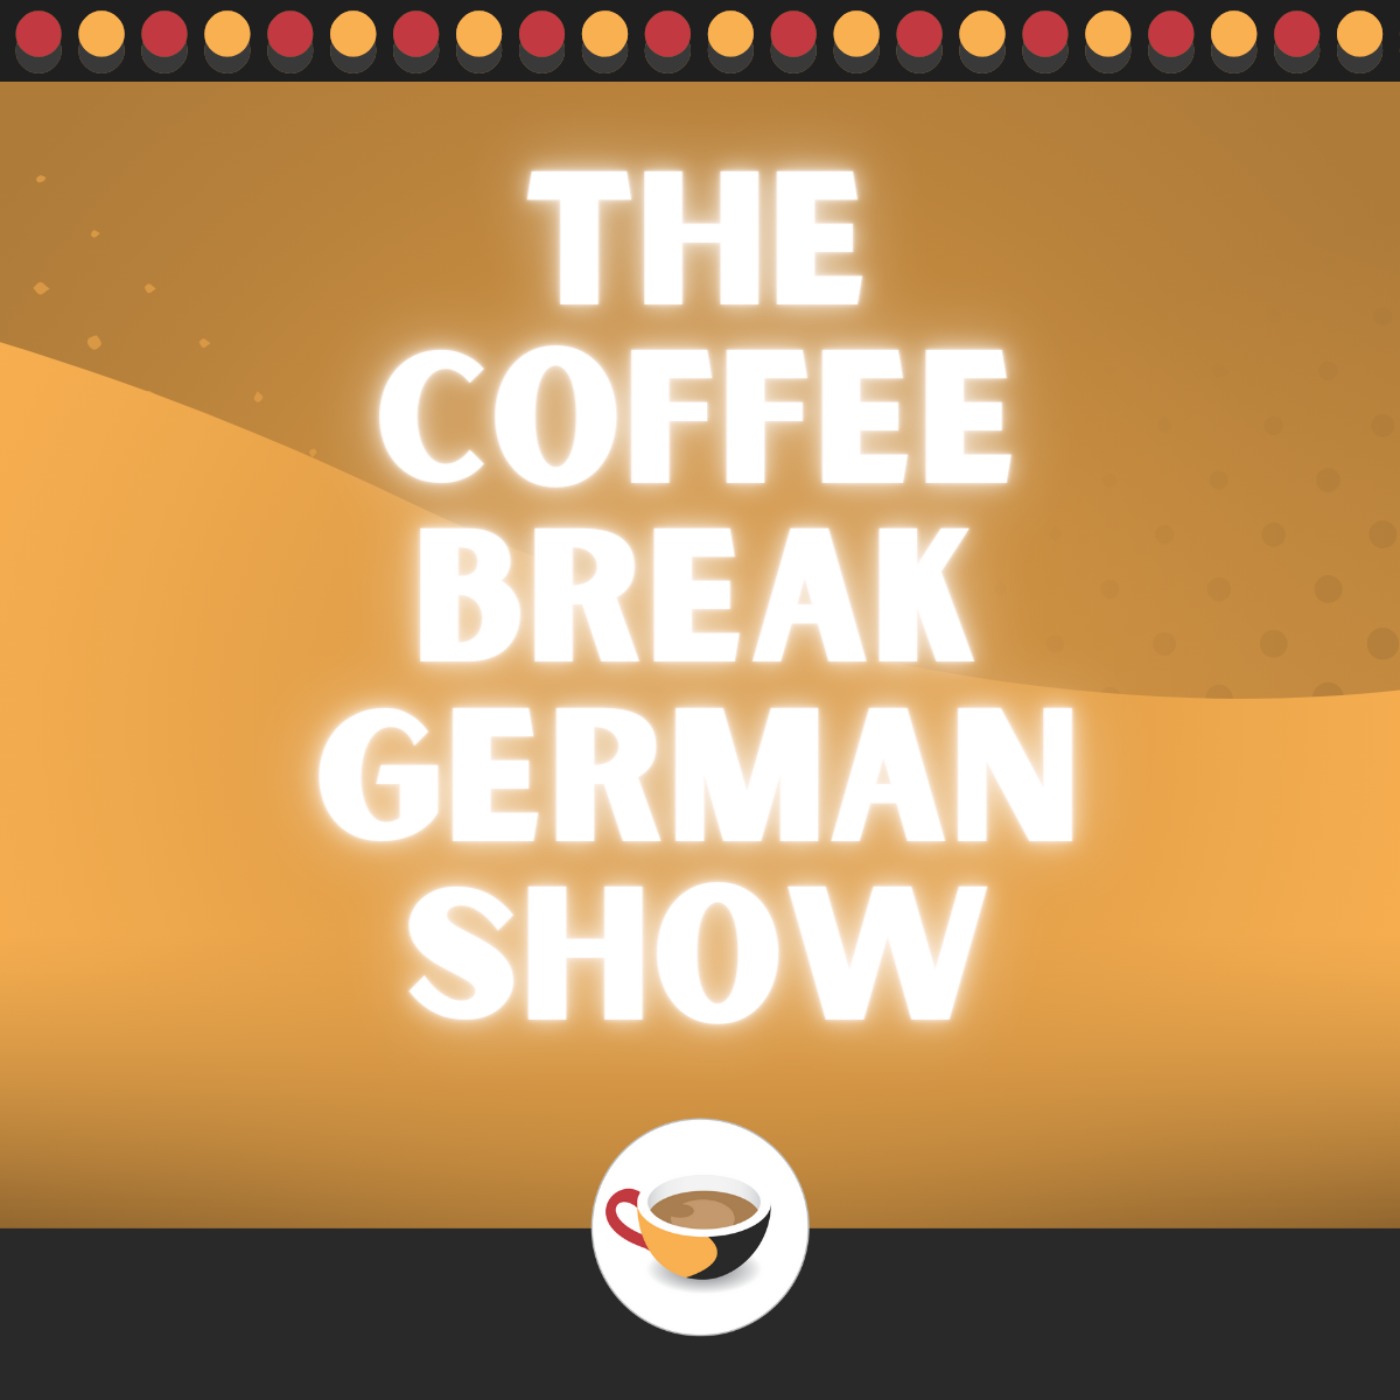 Introducing the Coffee Break German Show